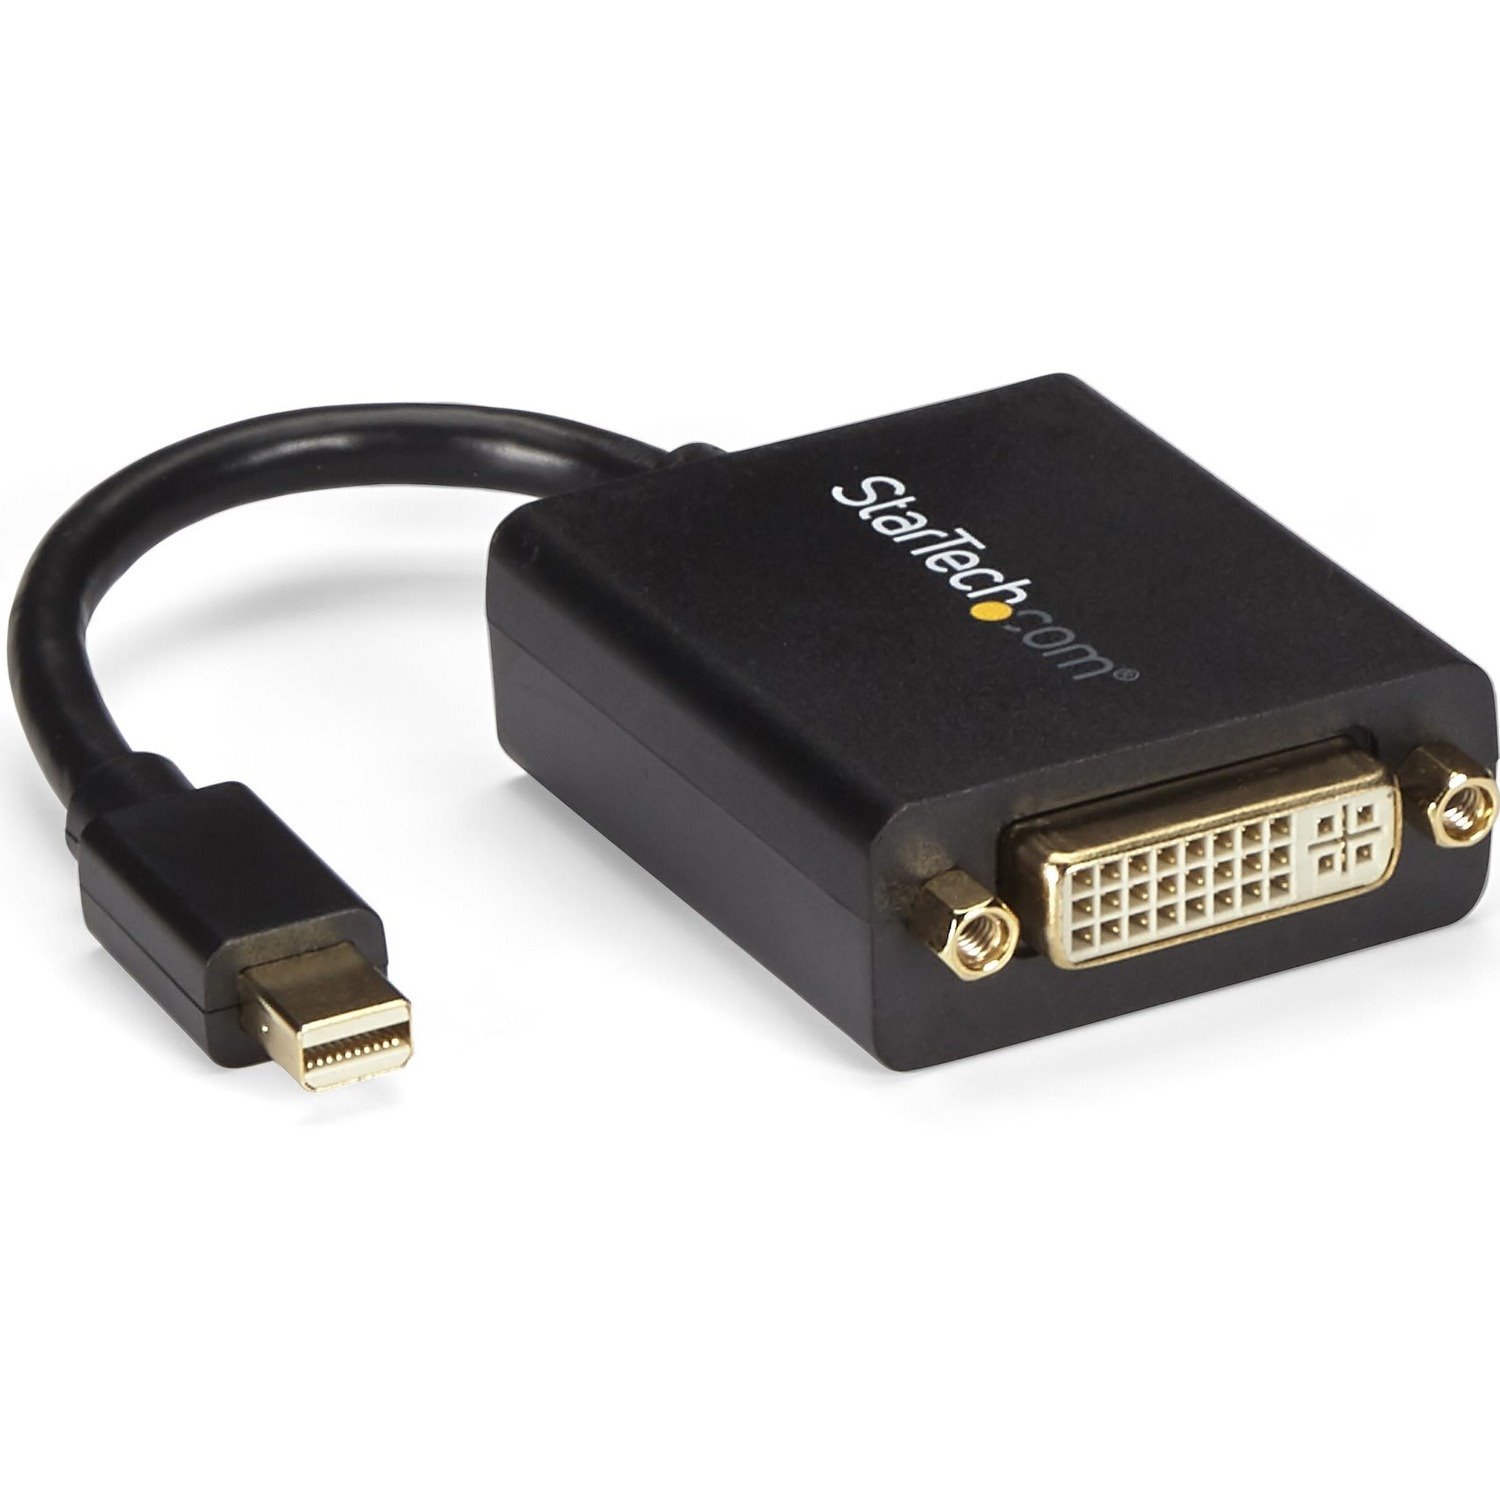 StarTech.com Mini DisplayPort to DVI Adapter, Mini DP to DVI-D Converter, 1080p Video, VESA Certified, mDP 1.2 to DVI Monitor/Display